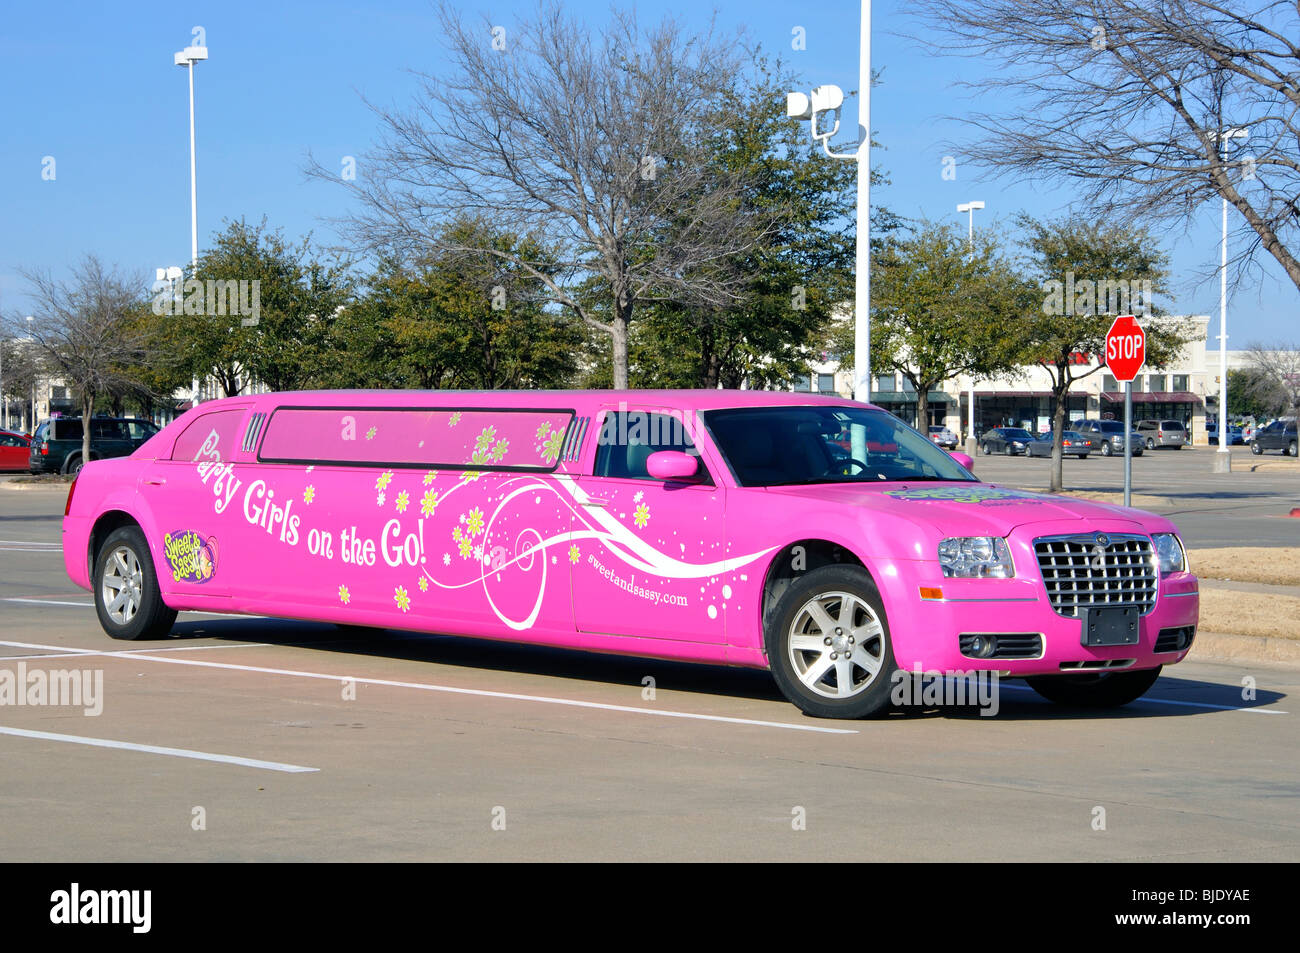 Pink stretch limousine, USA Stock Photo - Alamy